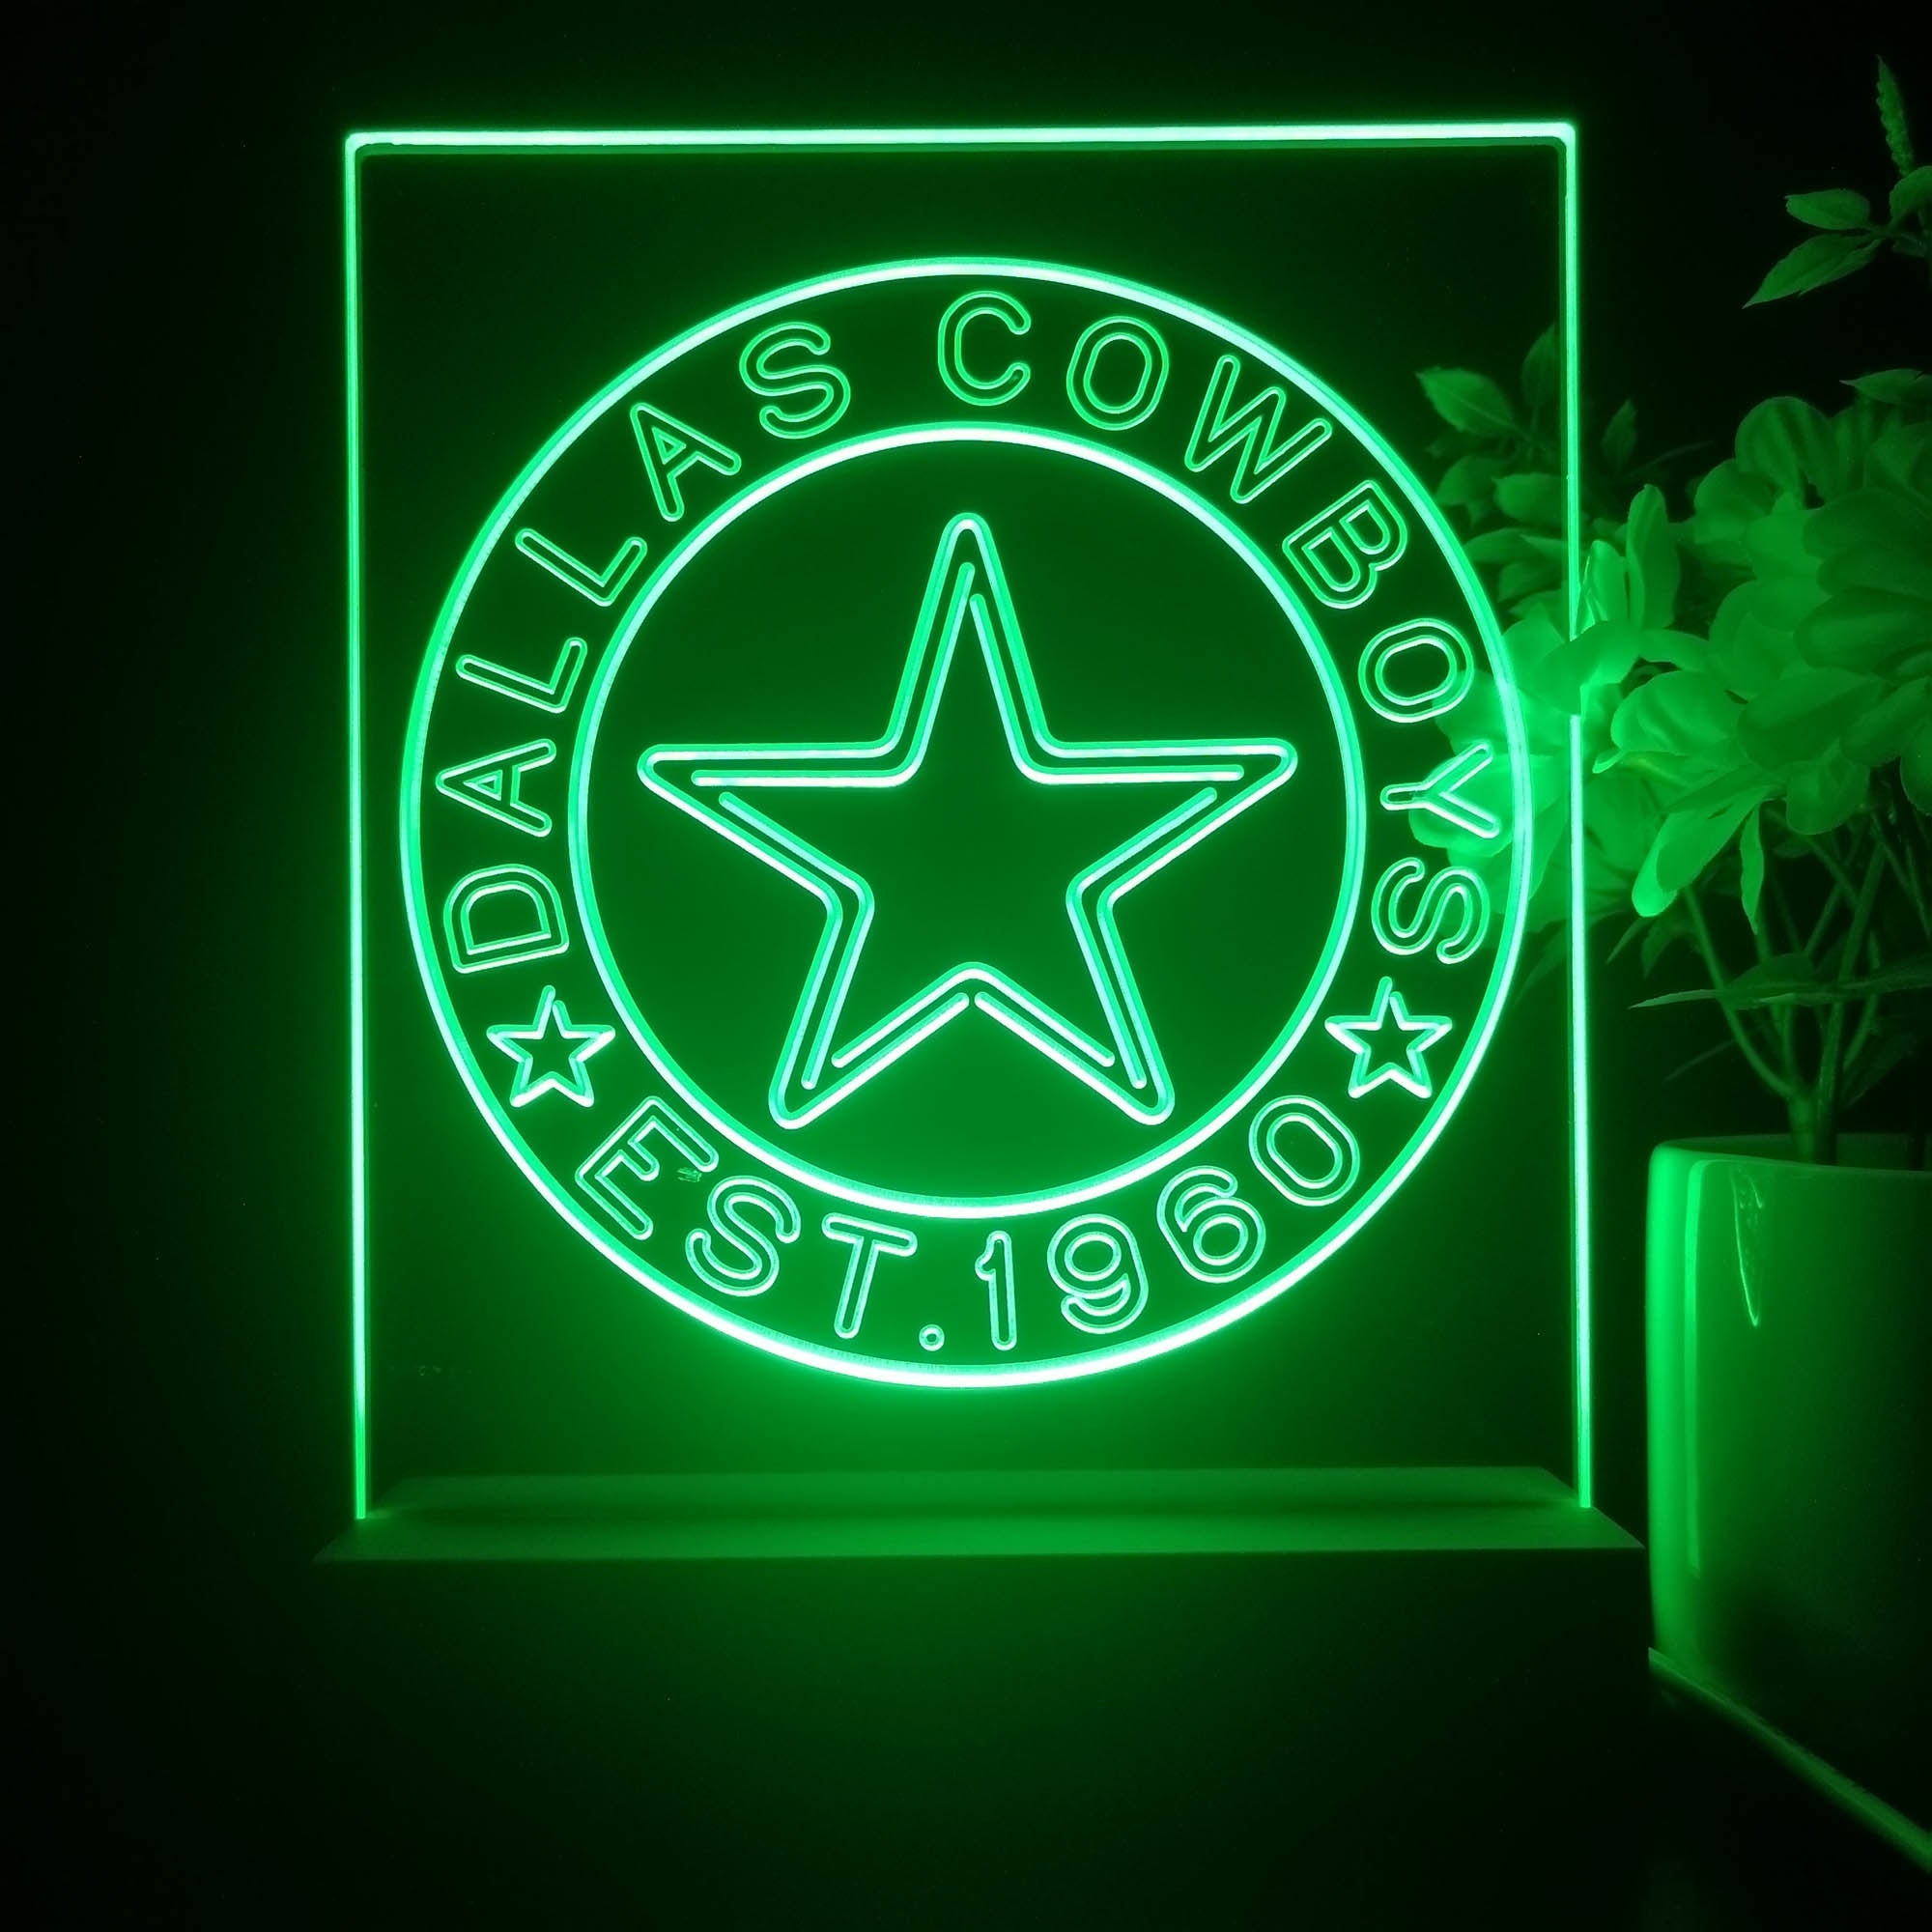 Personalized Dallas Cowboys Souvenir Neon LED Night Light Sign